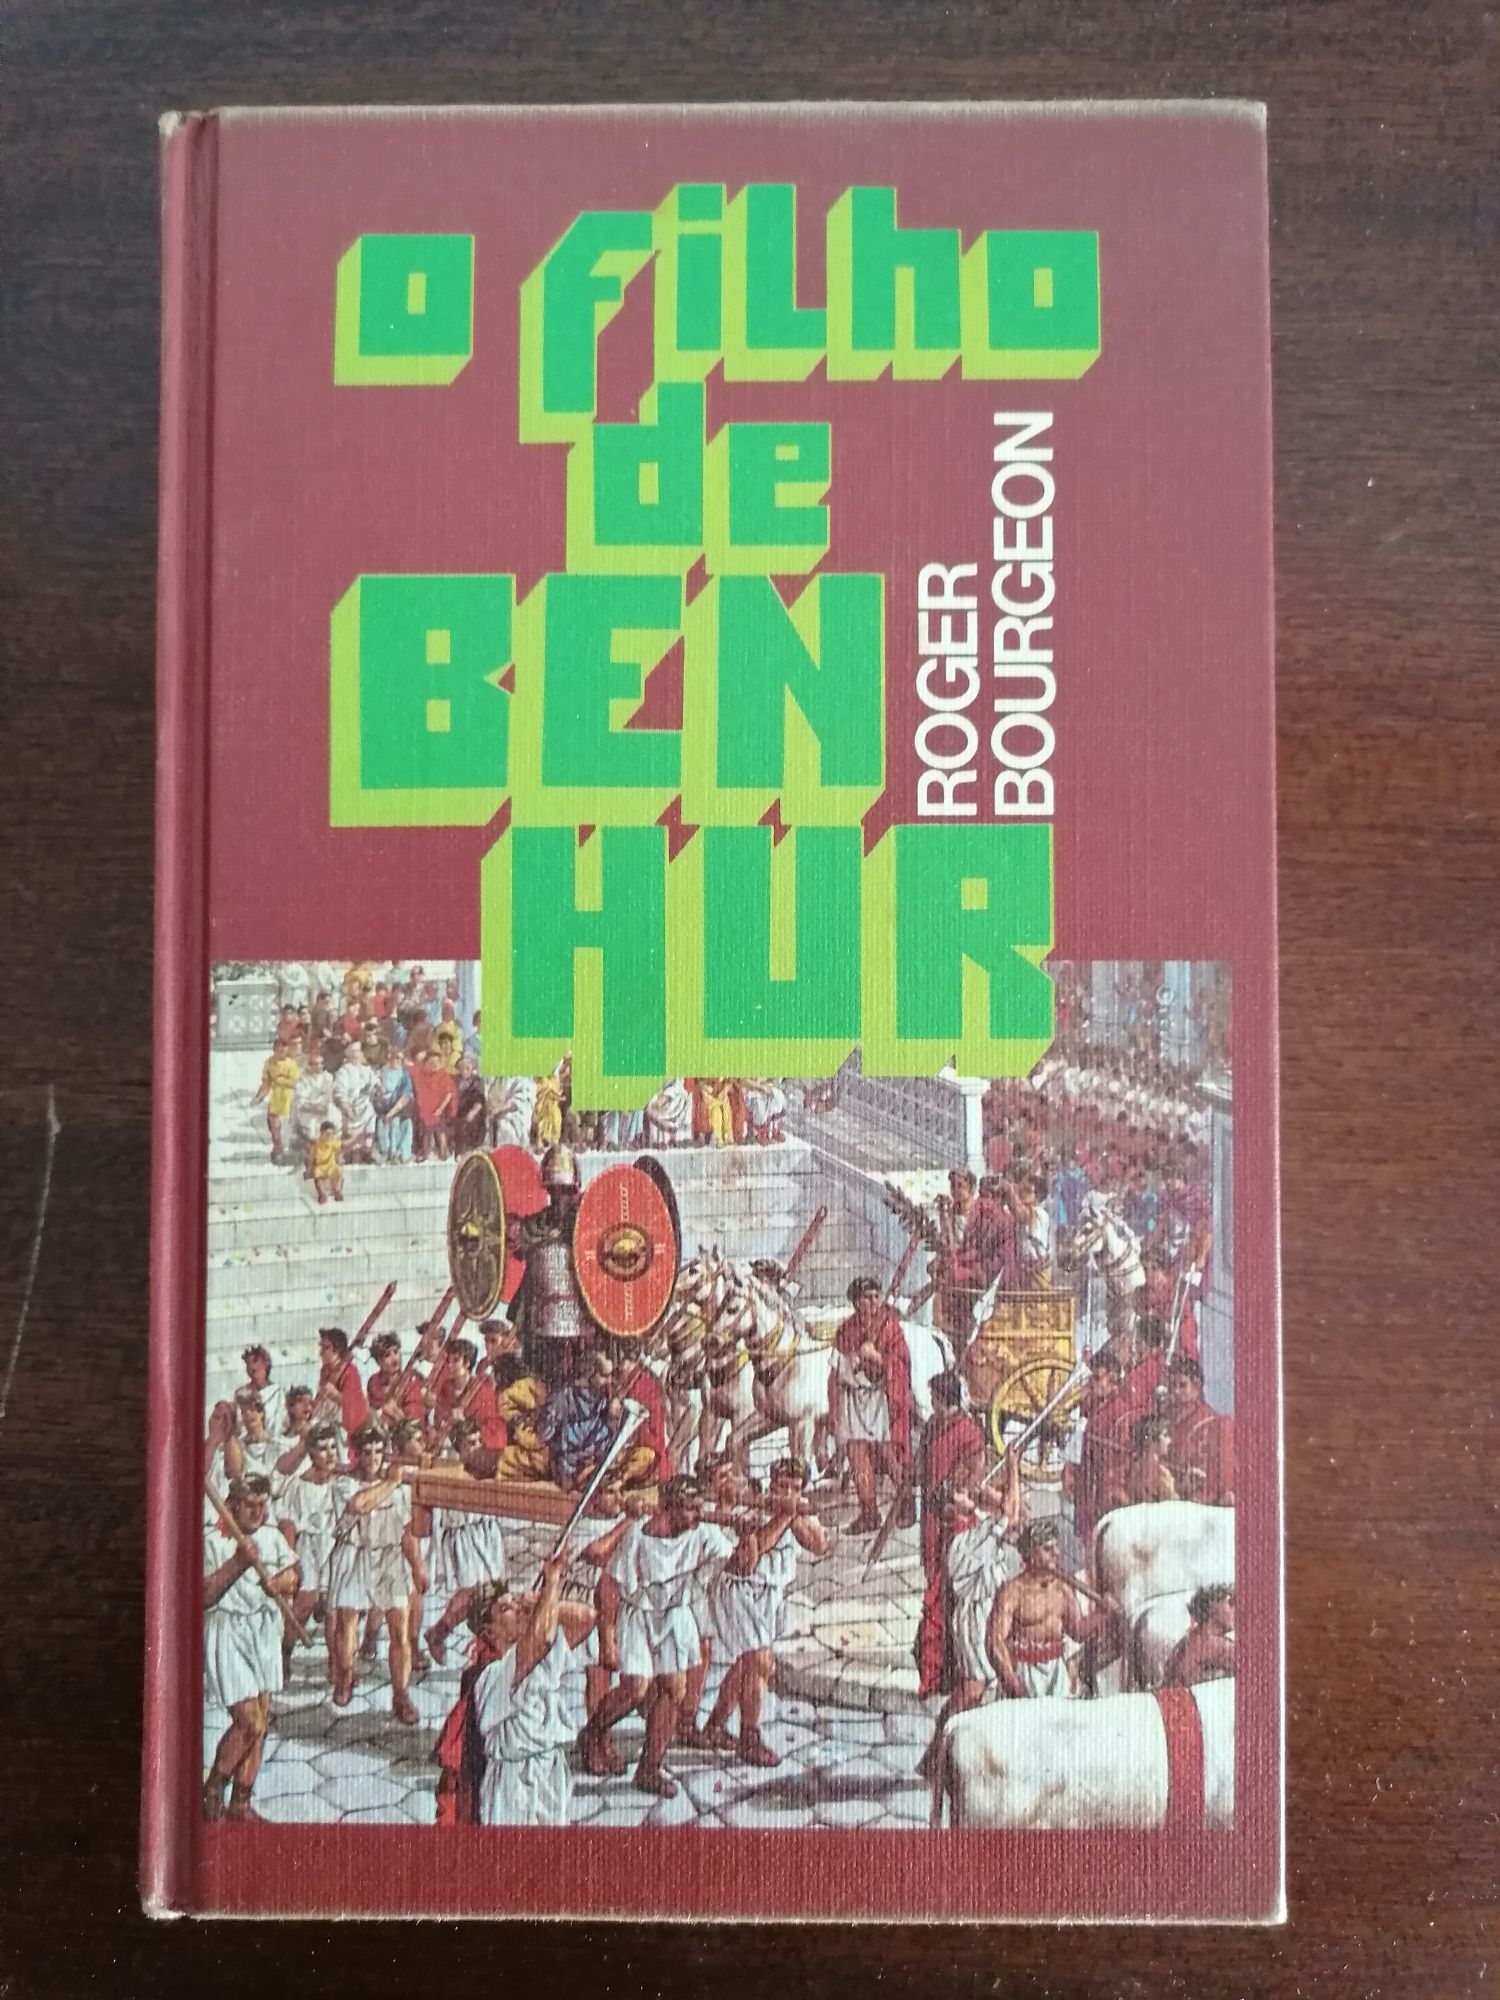 Livro "O Filho de Ben Hur", de Roger Bourgeon